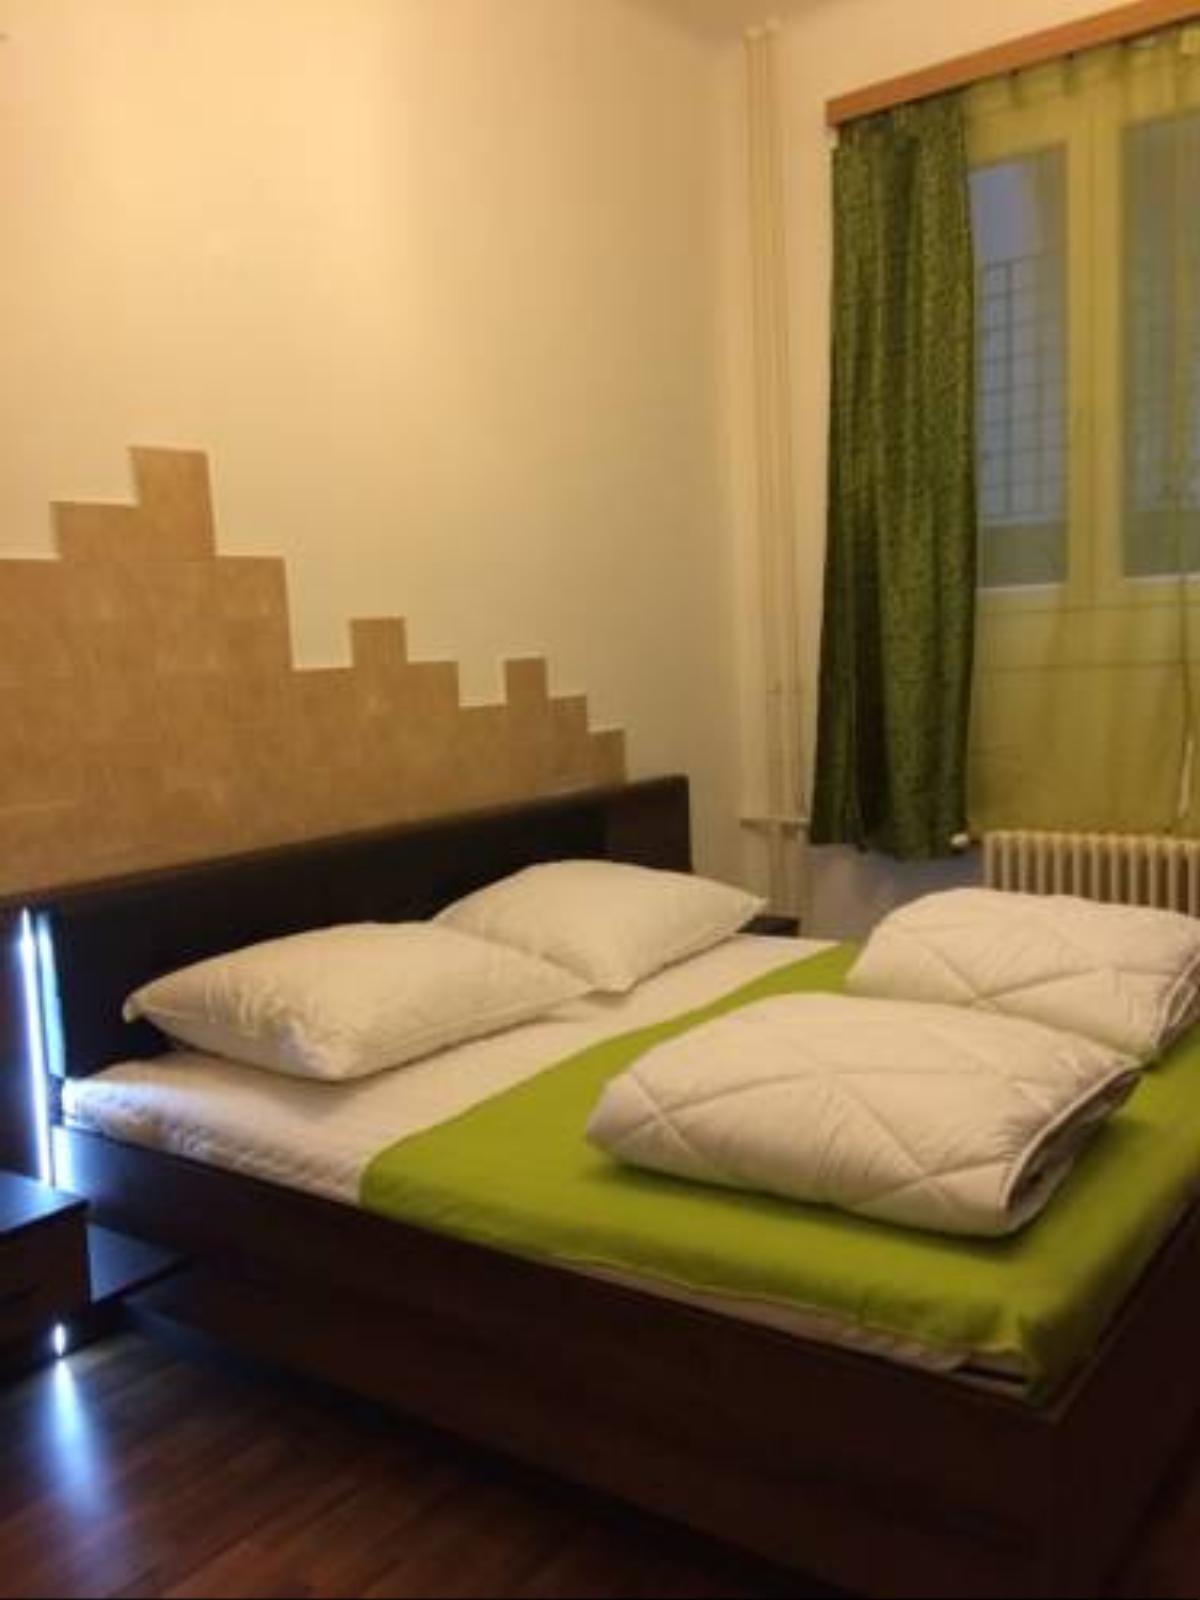 Monolit Apartment Comfort Hotel Budapest Hungary